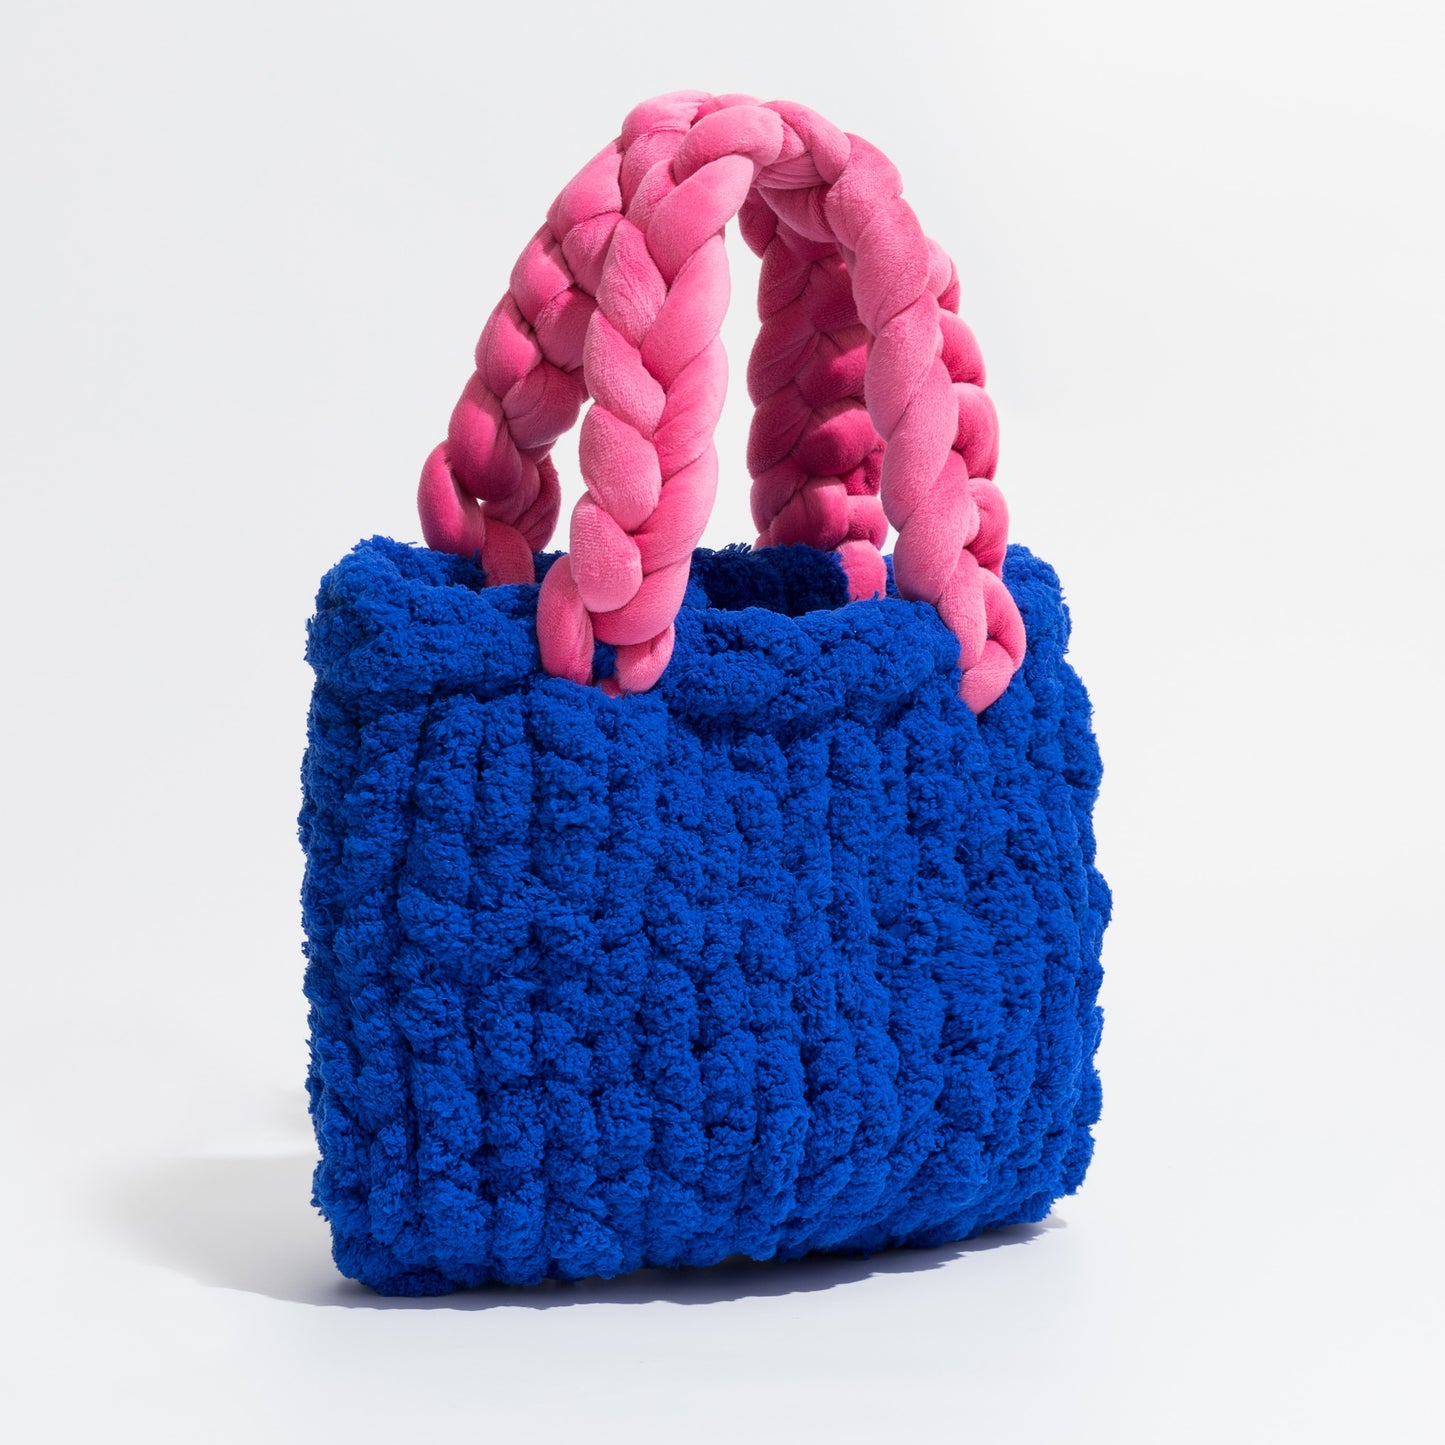 Handbag Queen Ovve (9 Colors)